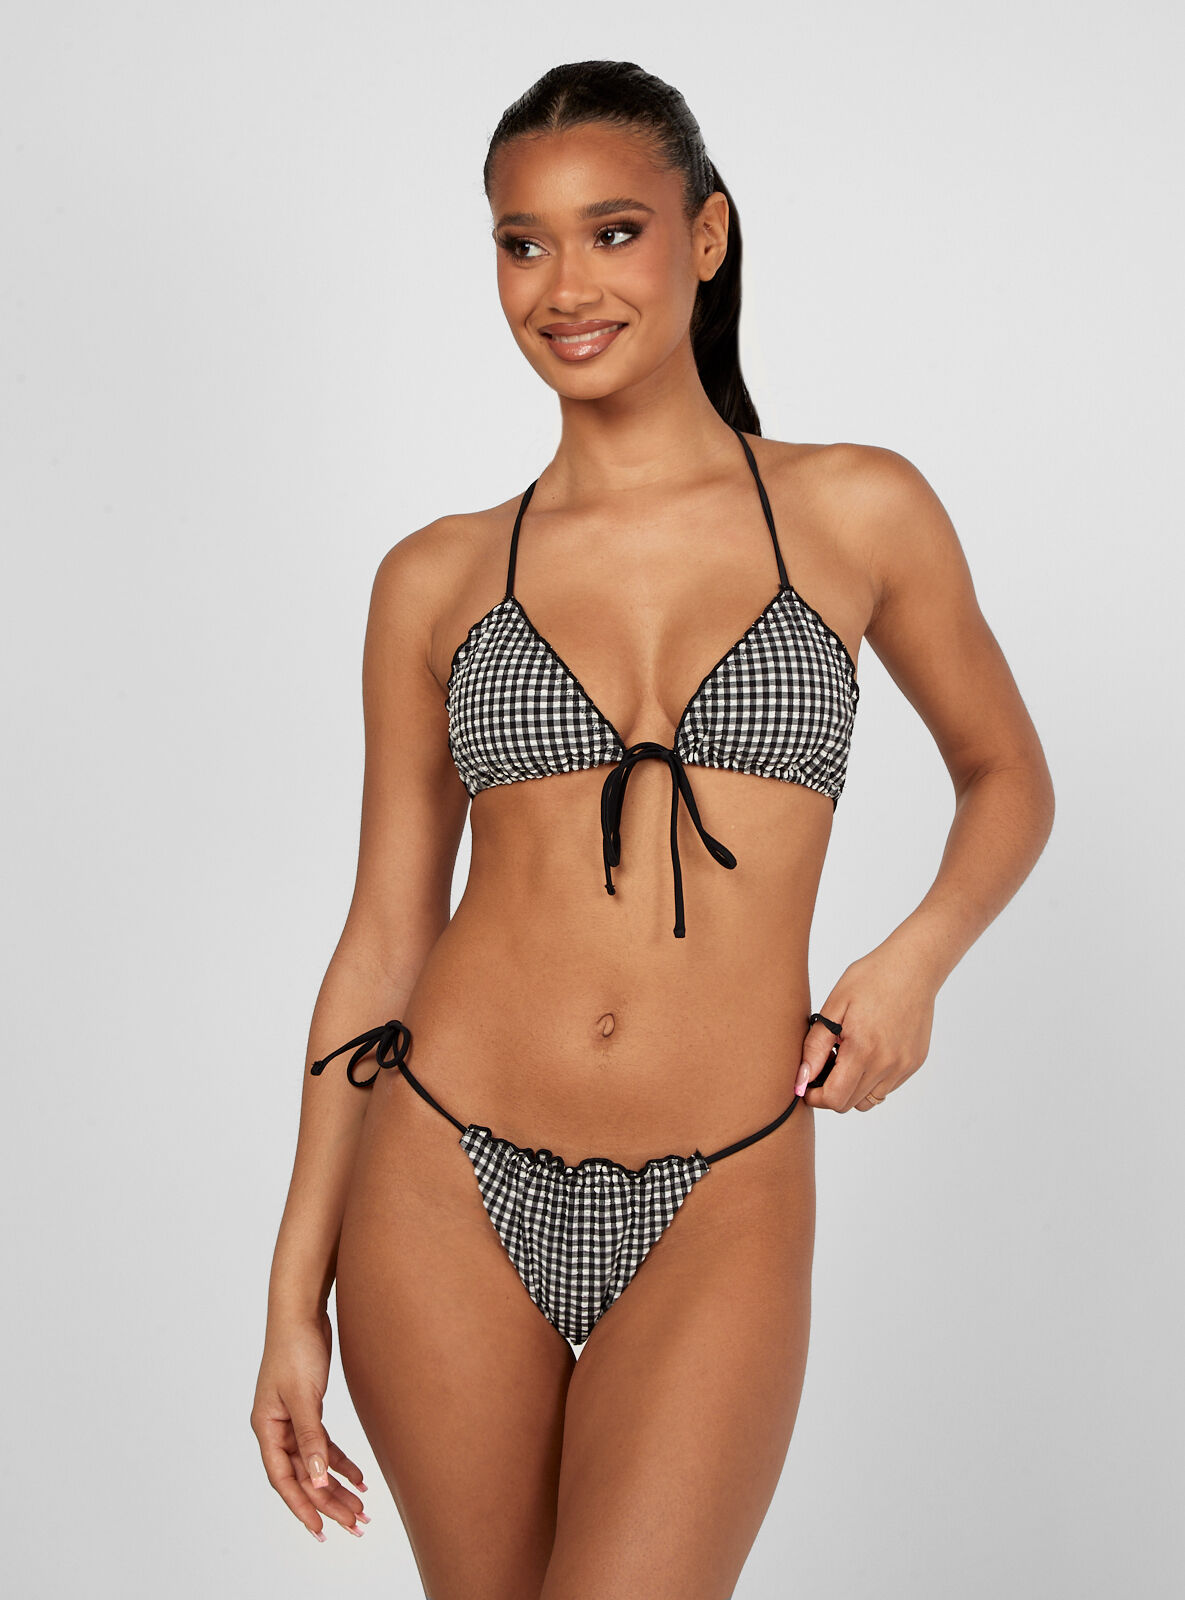 Boux Avenue Galle gingham triangle bikini top - Black & White - 18